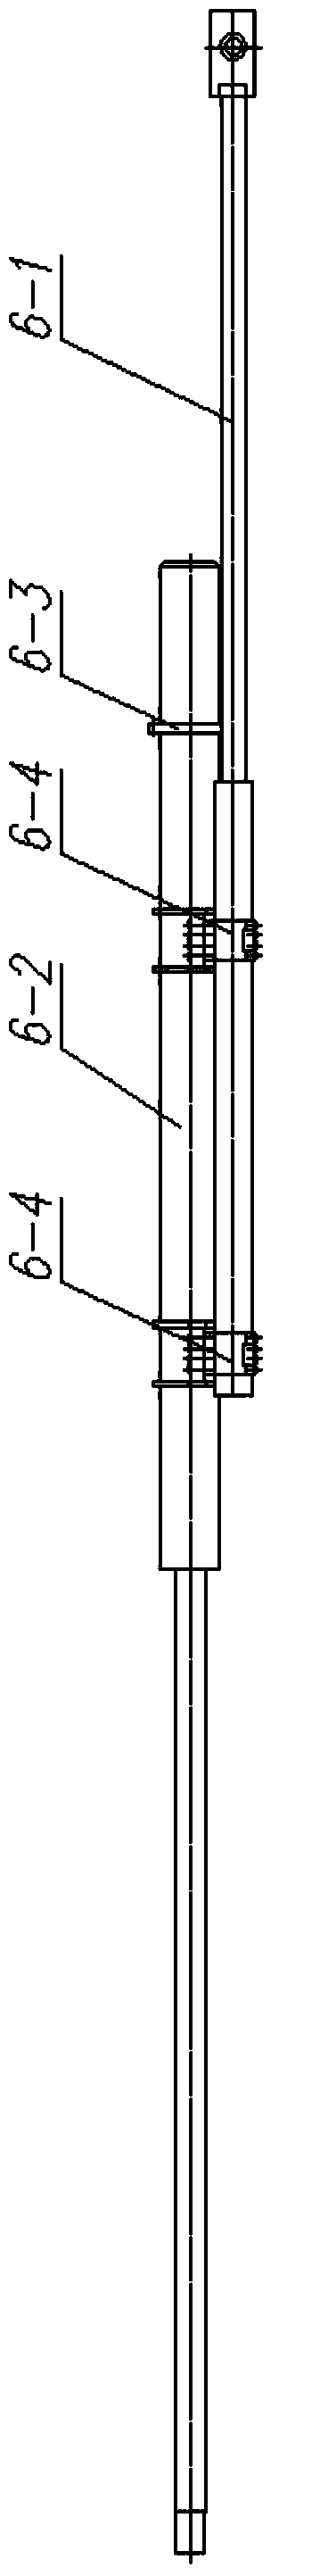 Swingable telescopic balance weight structure for railway crane